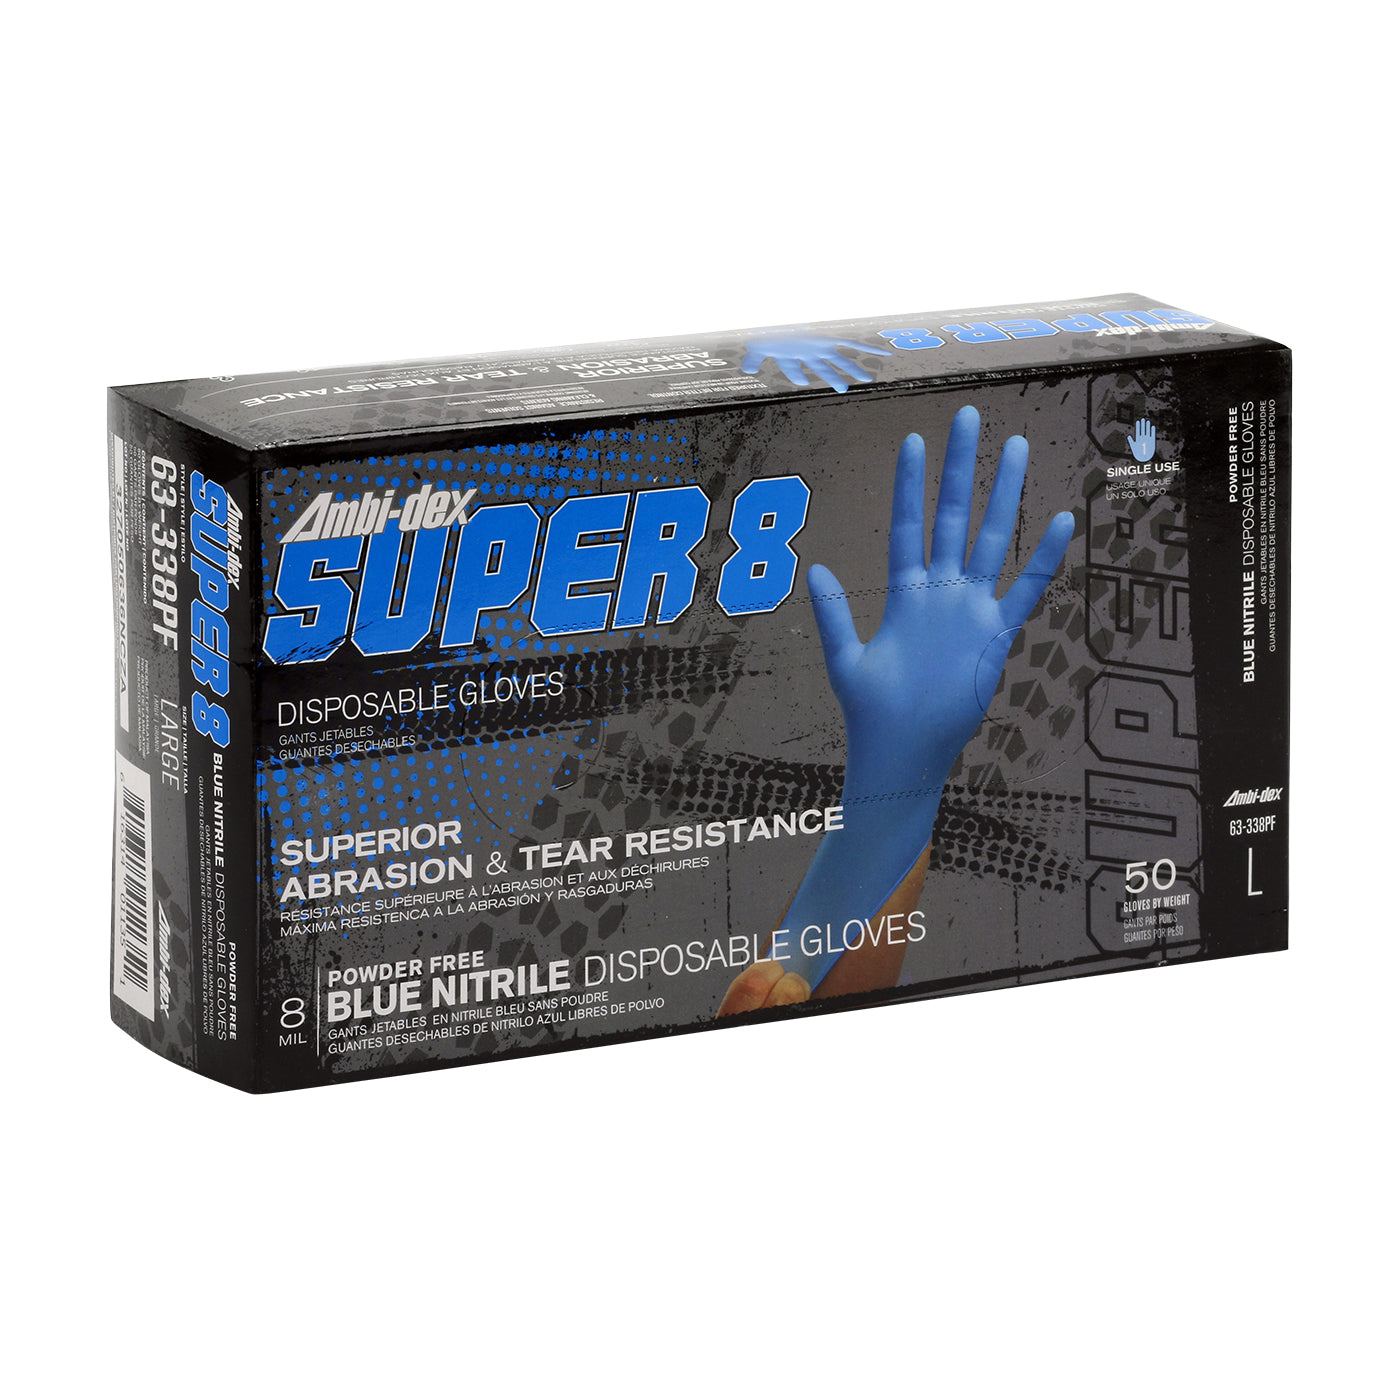 Ambi-dex 63-338PF/XL Disposable Nitrile Glove, Powder Free with Textured Grip - 8 mil